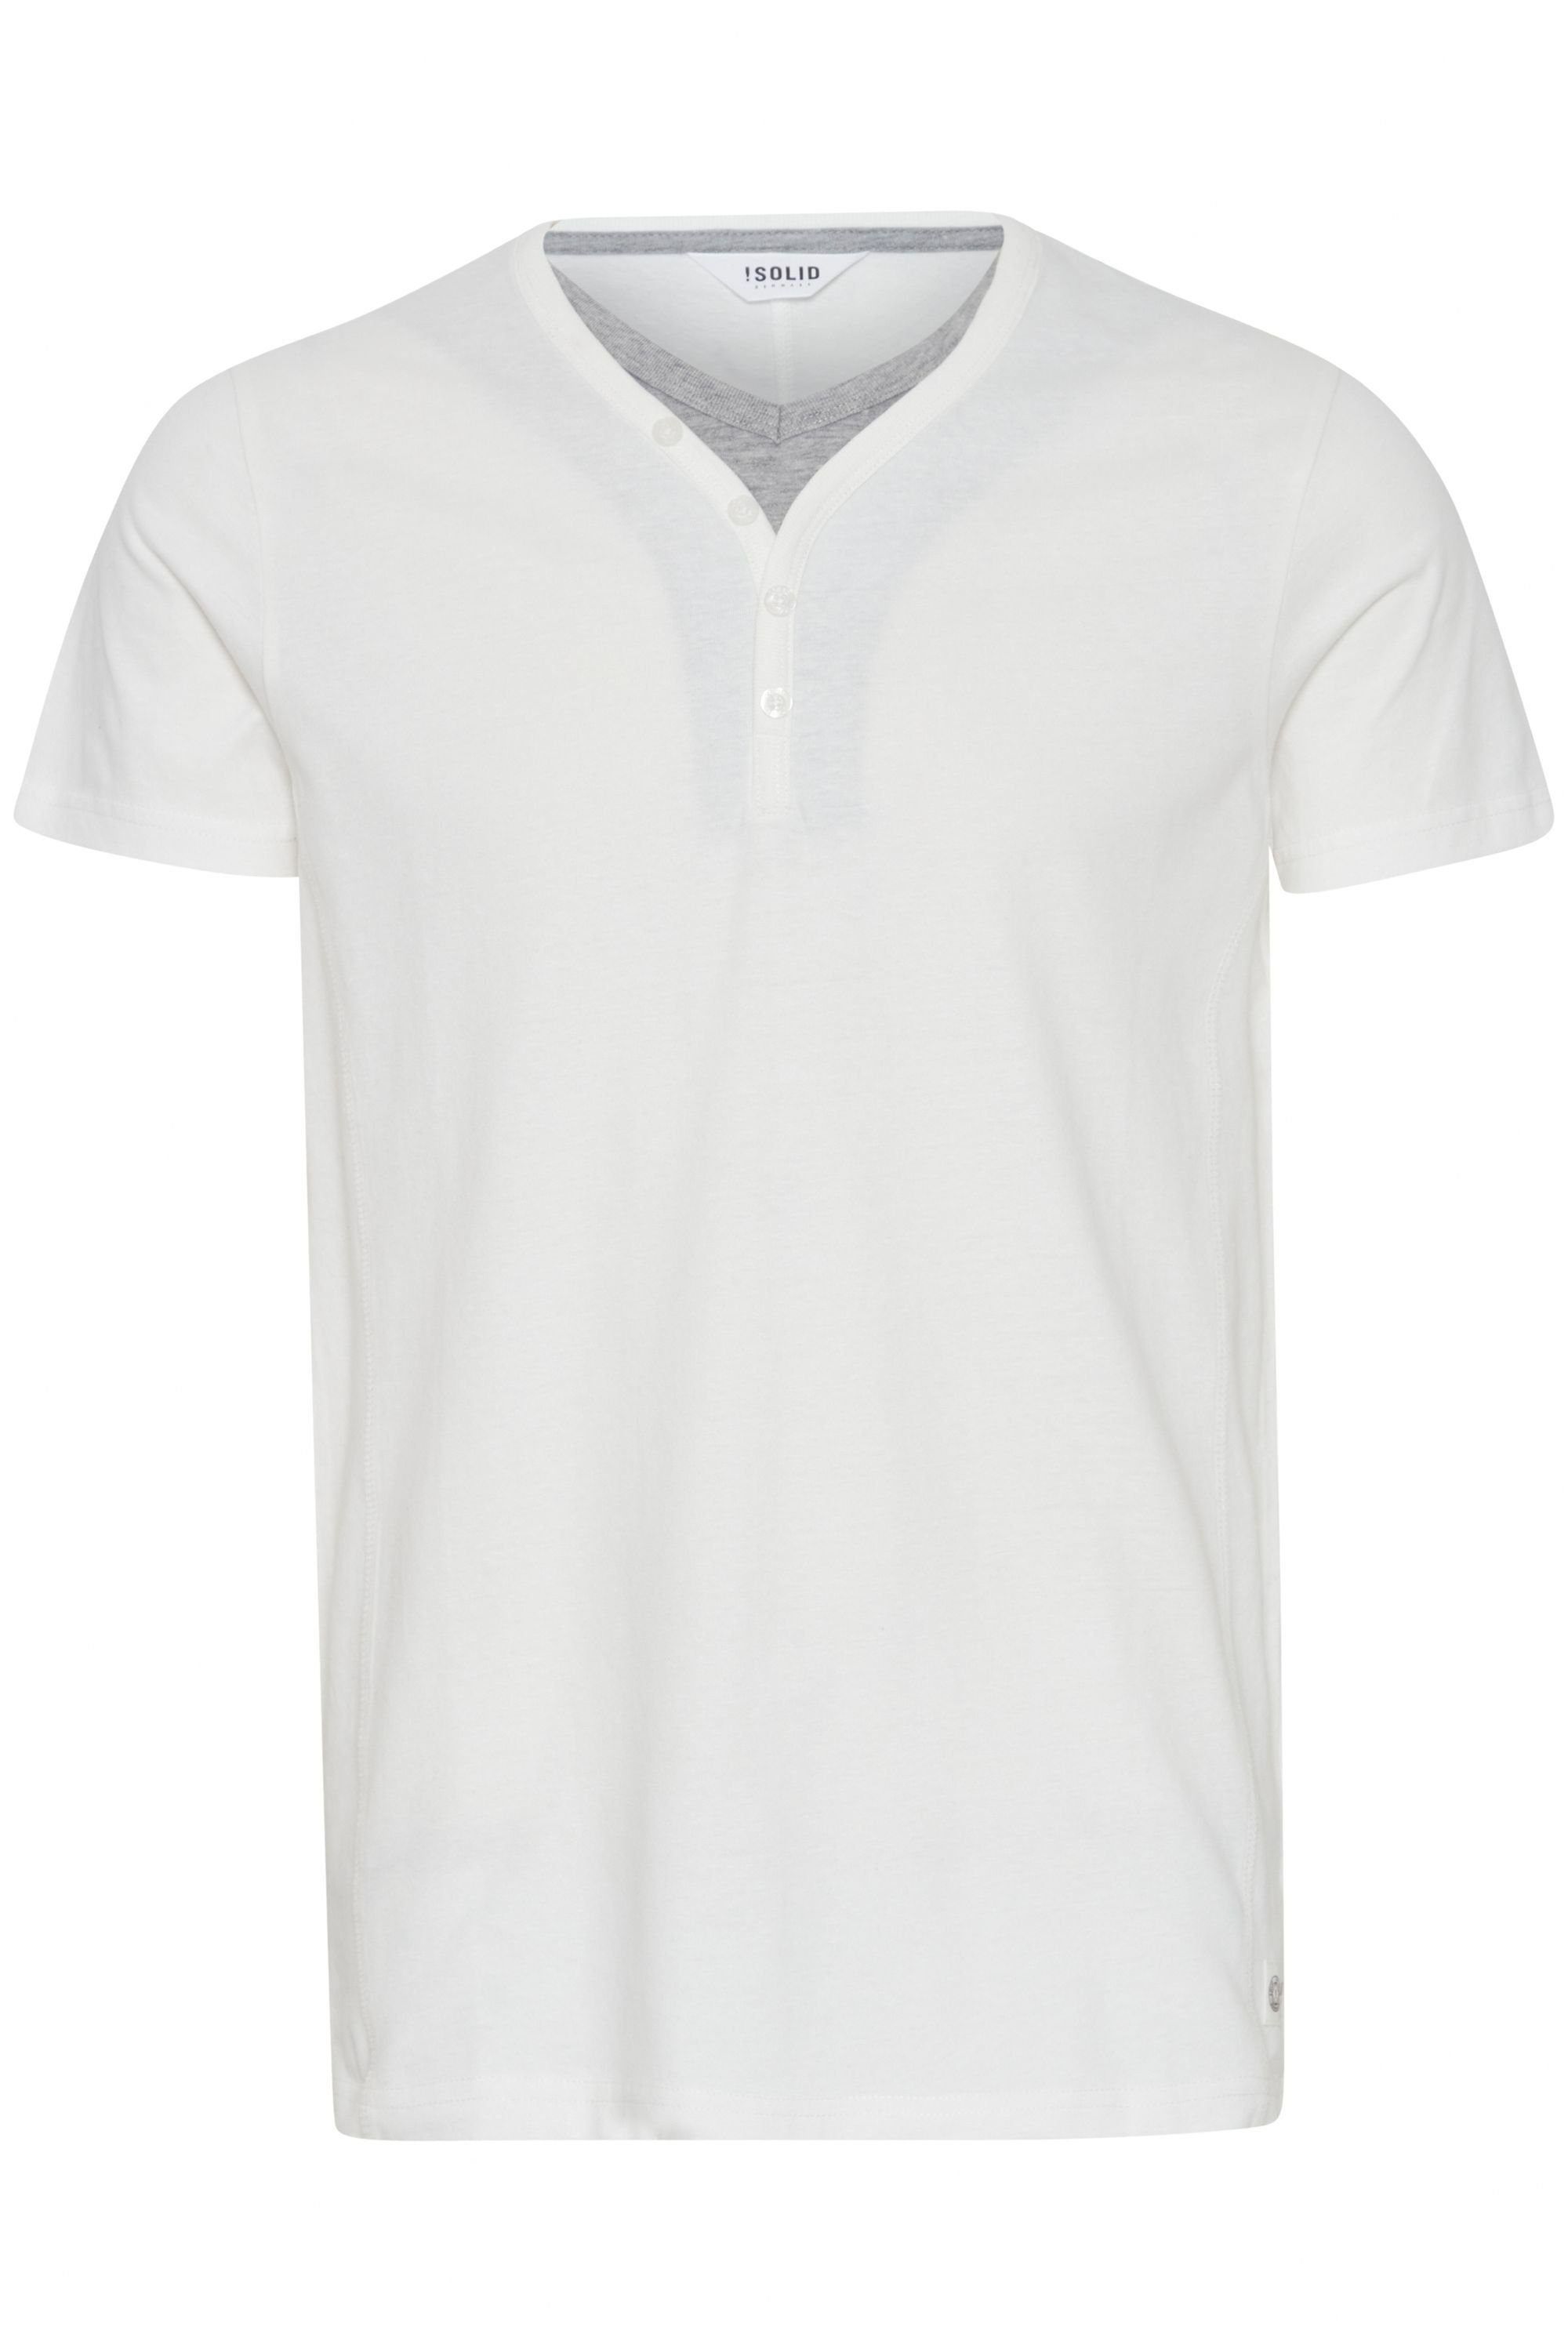 !Solid Layershirt SDDorian Kurzarmshirt im 2-in-1 Look